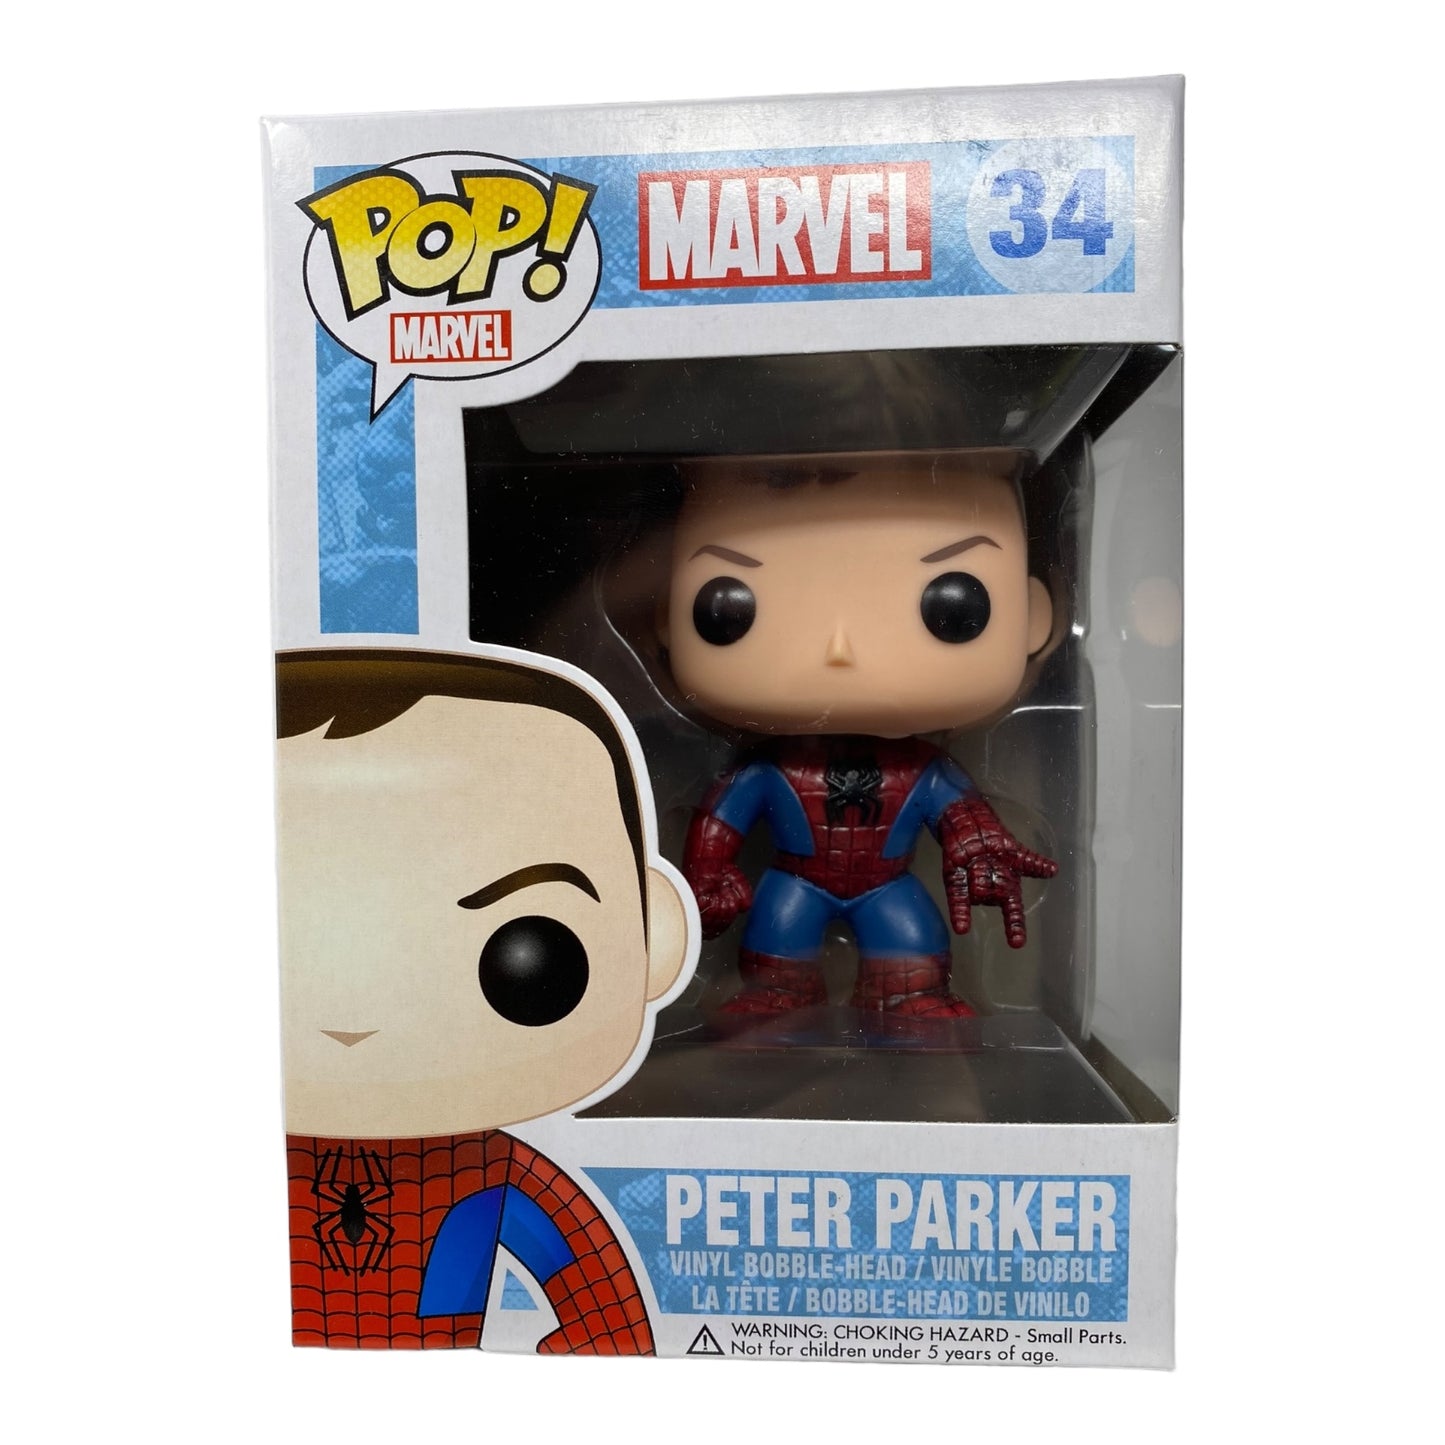 2013 - Peter Parker 34 (Minty)